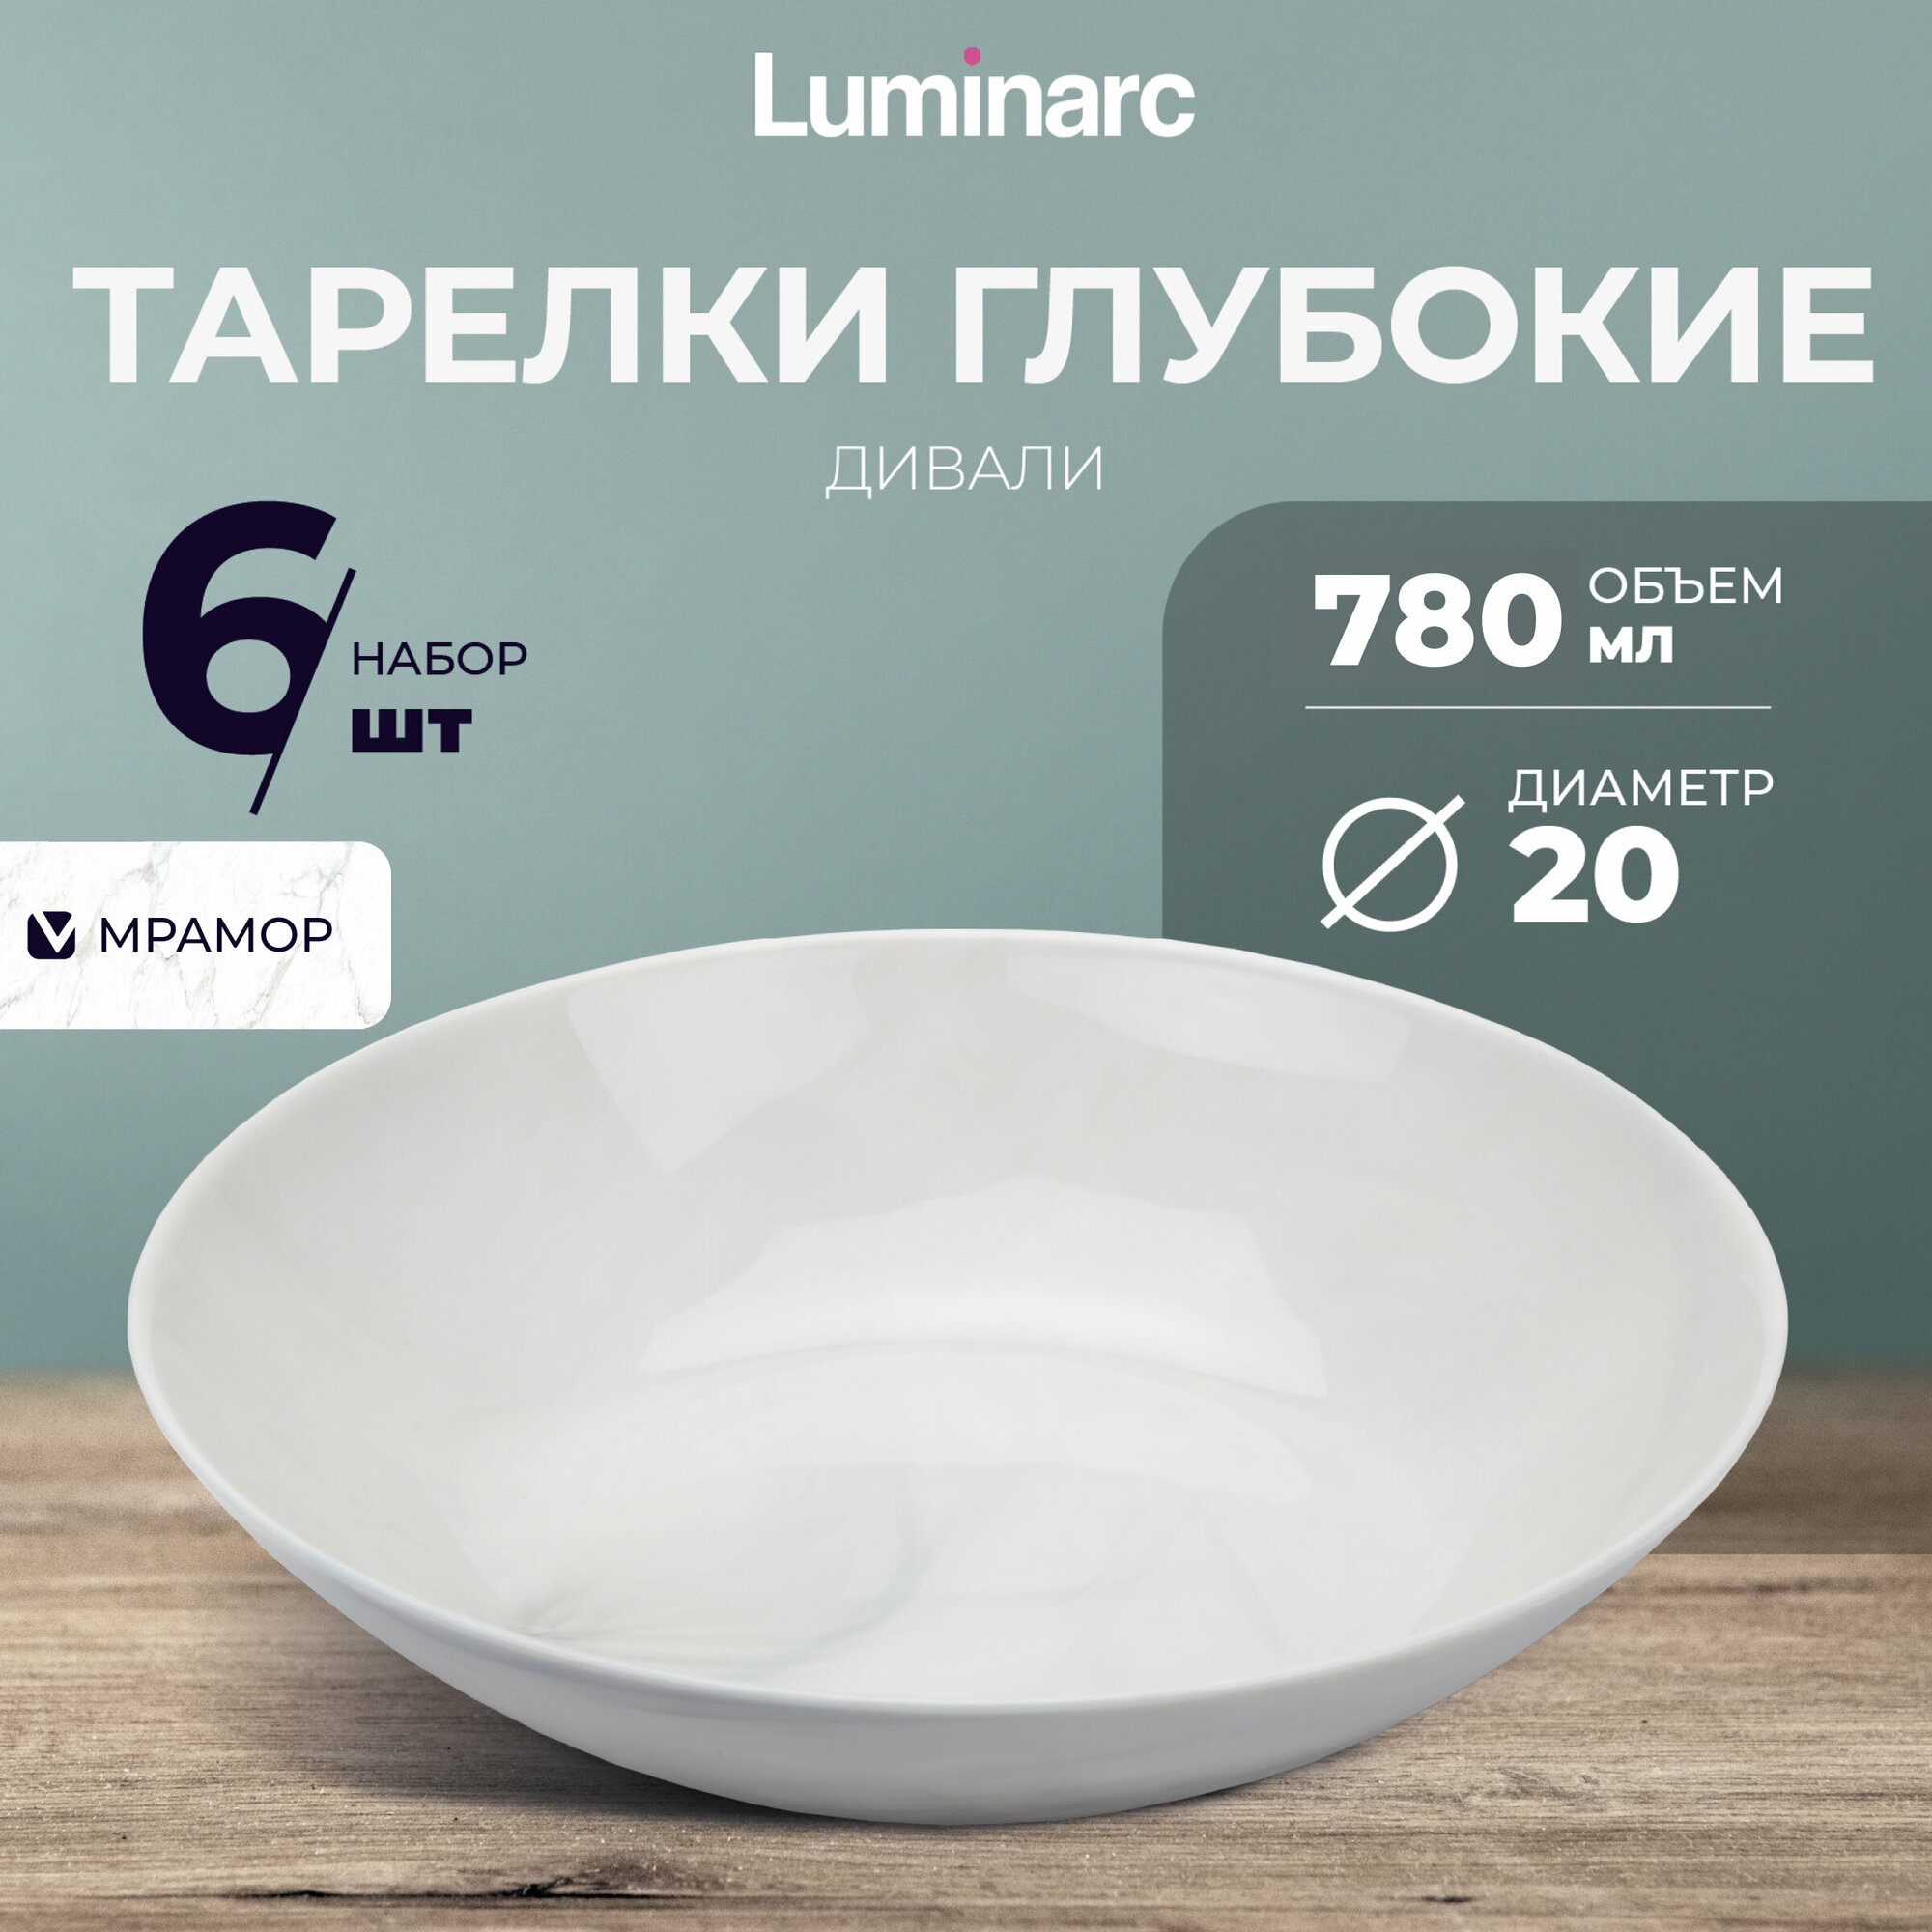 Тарелки Luminarc дивали марбл 780 мл / тарелка суповая 20 см / тарелки набор 6 шт